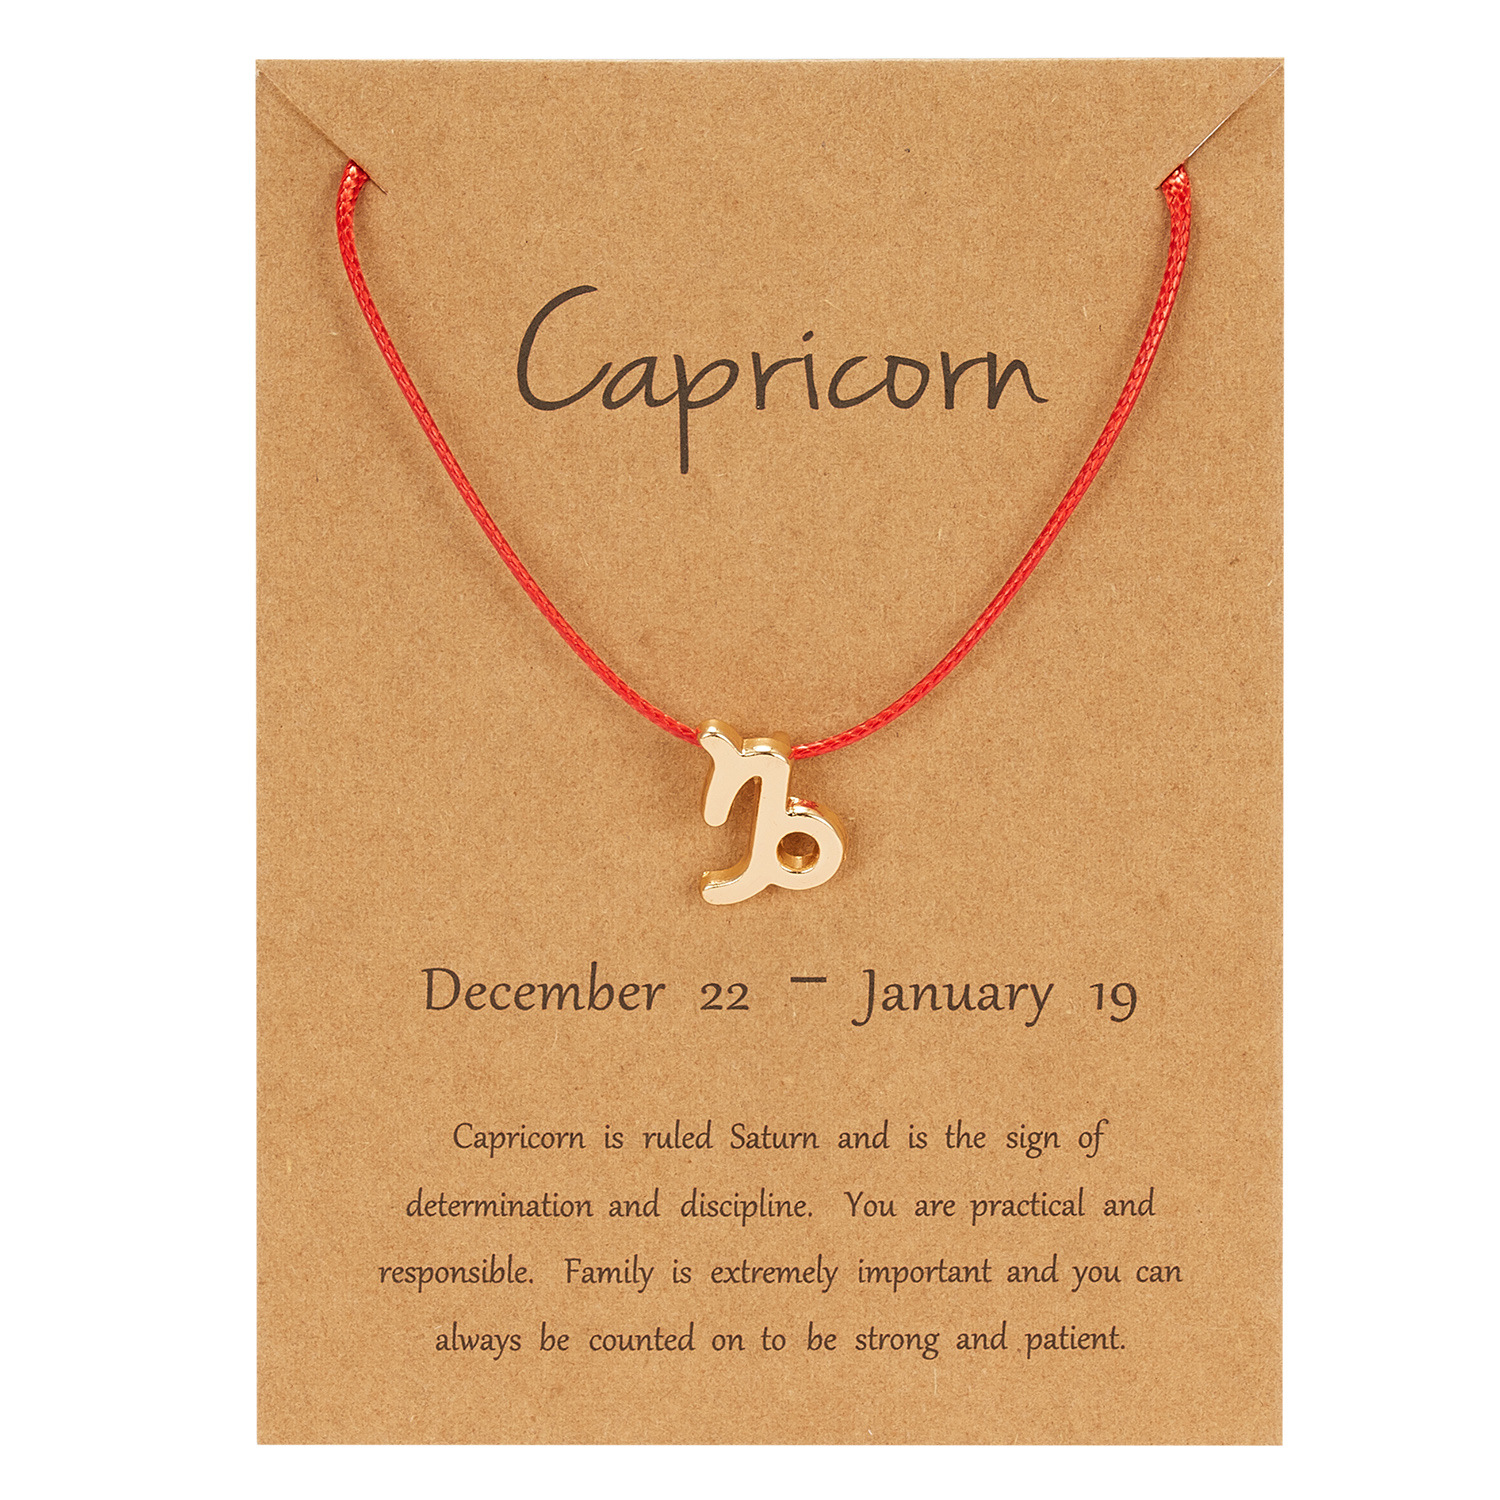 Capricorn (Red Rope)